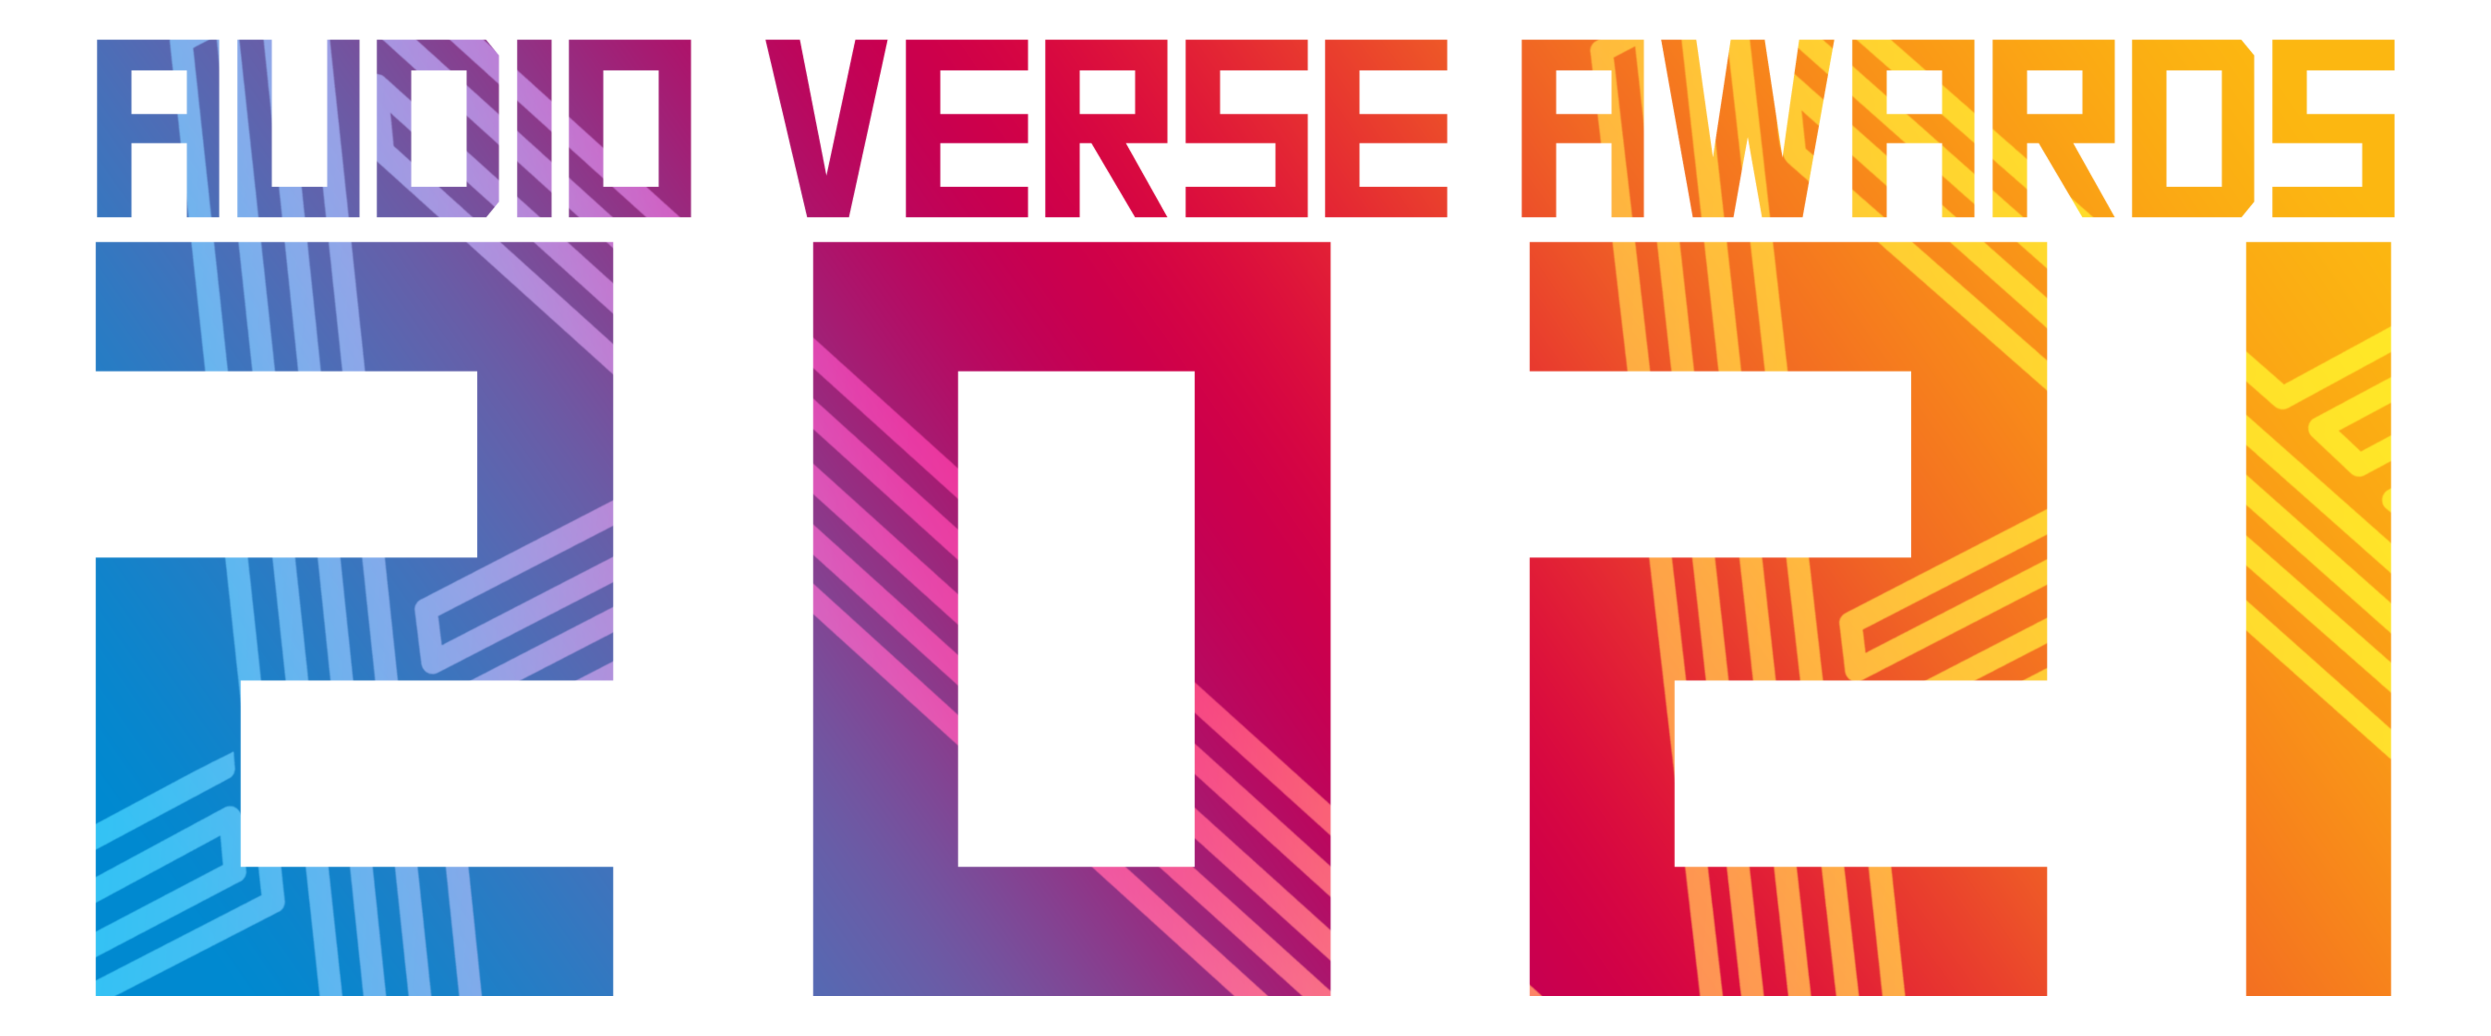 The Audio Verse Awards